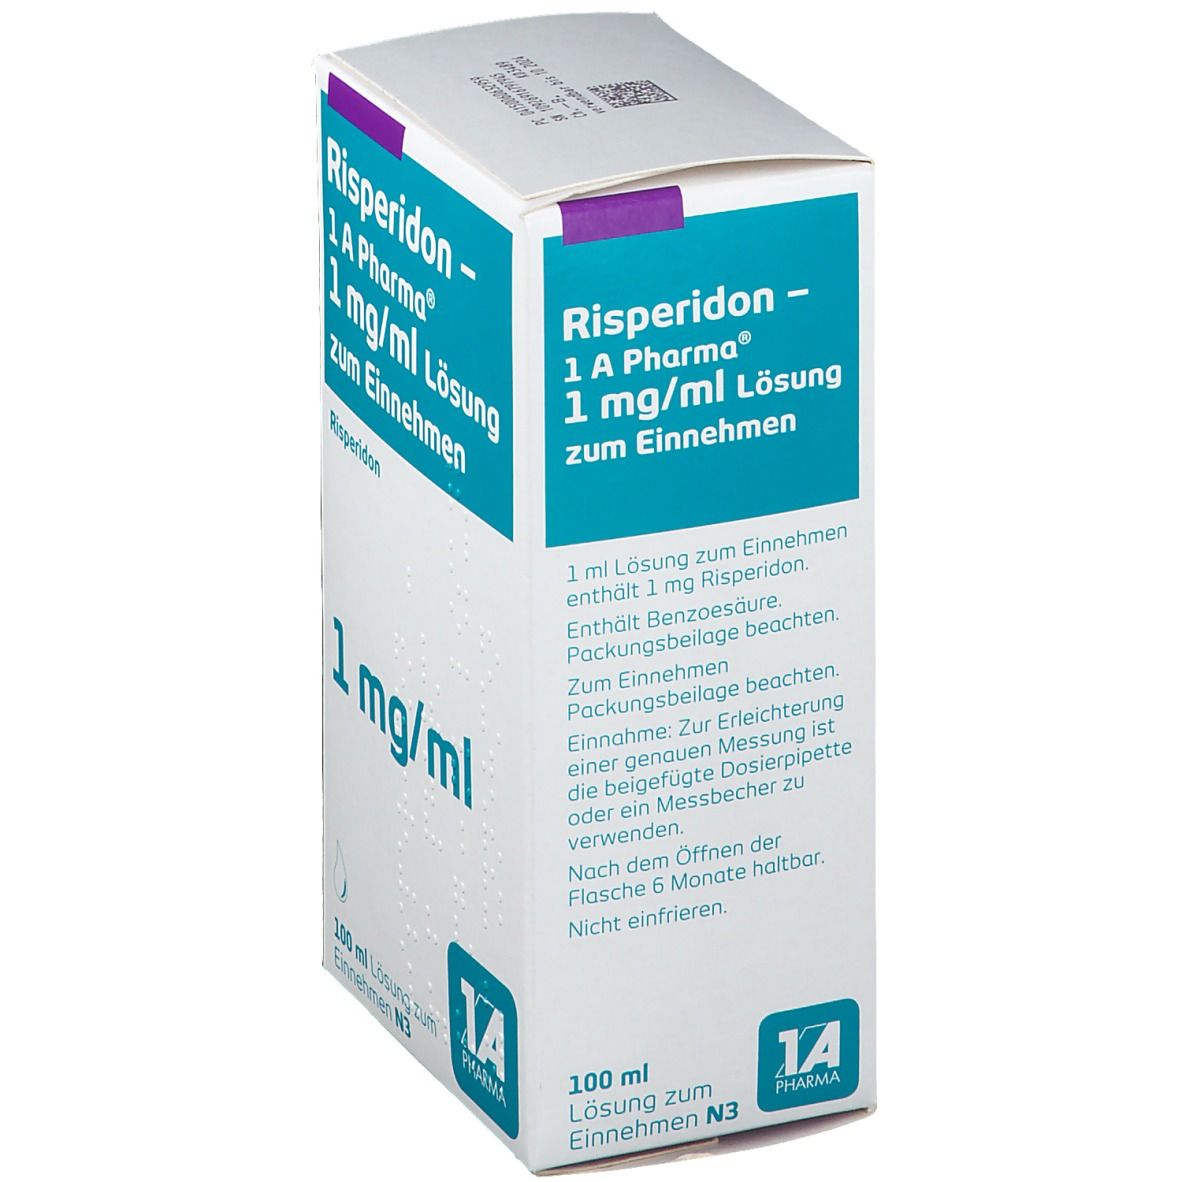 Risperidon 1A Pharma®1Mg/Ml